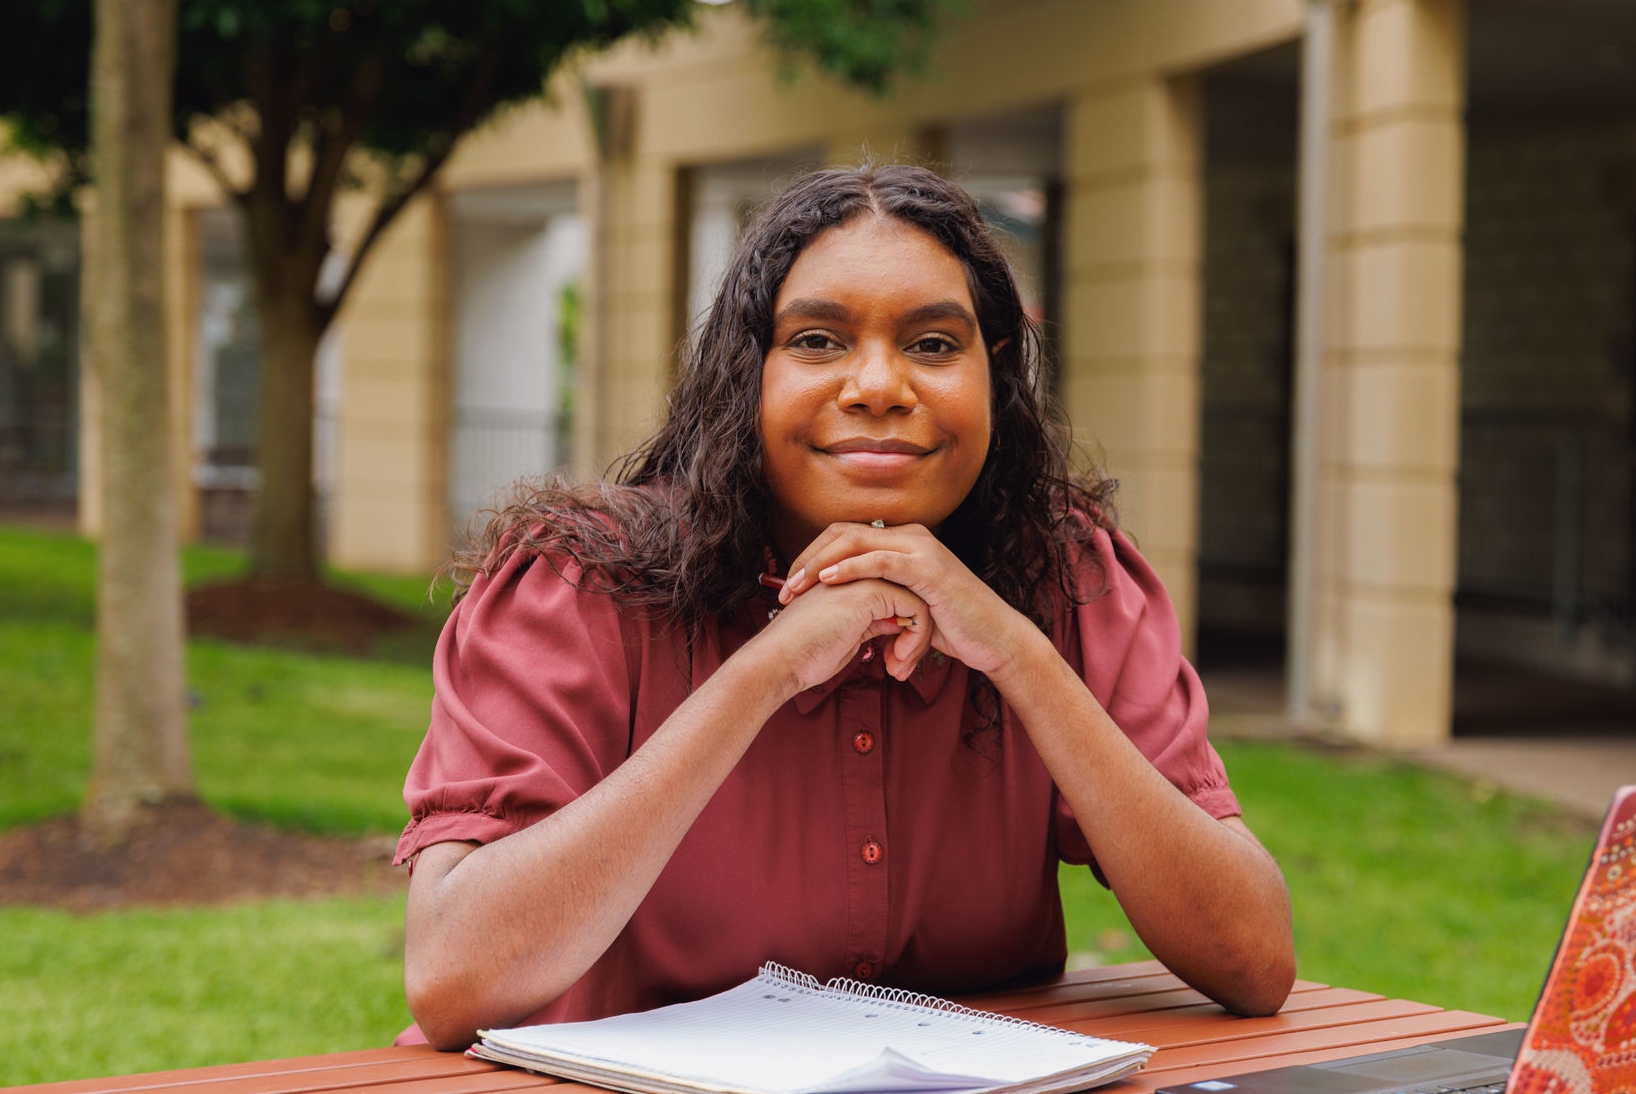 Portrait Of Female Aboriginal Australian Student On University Campus